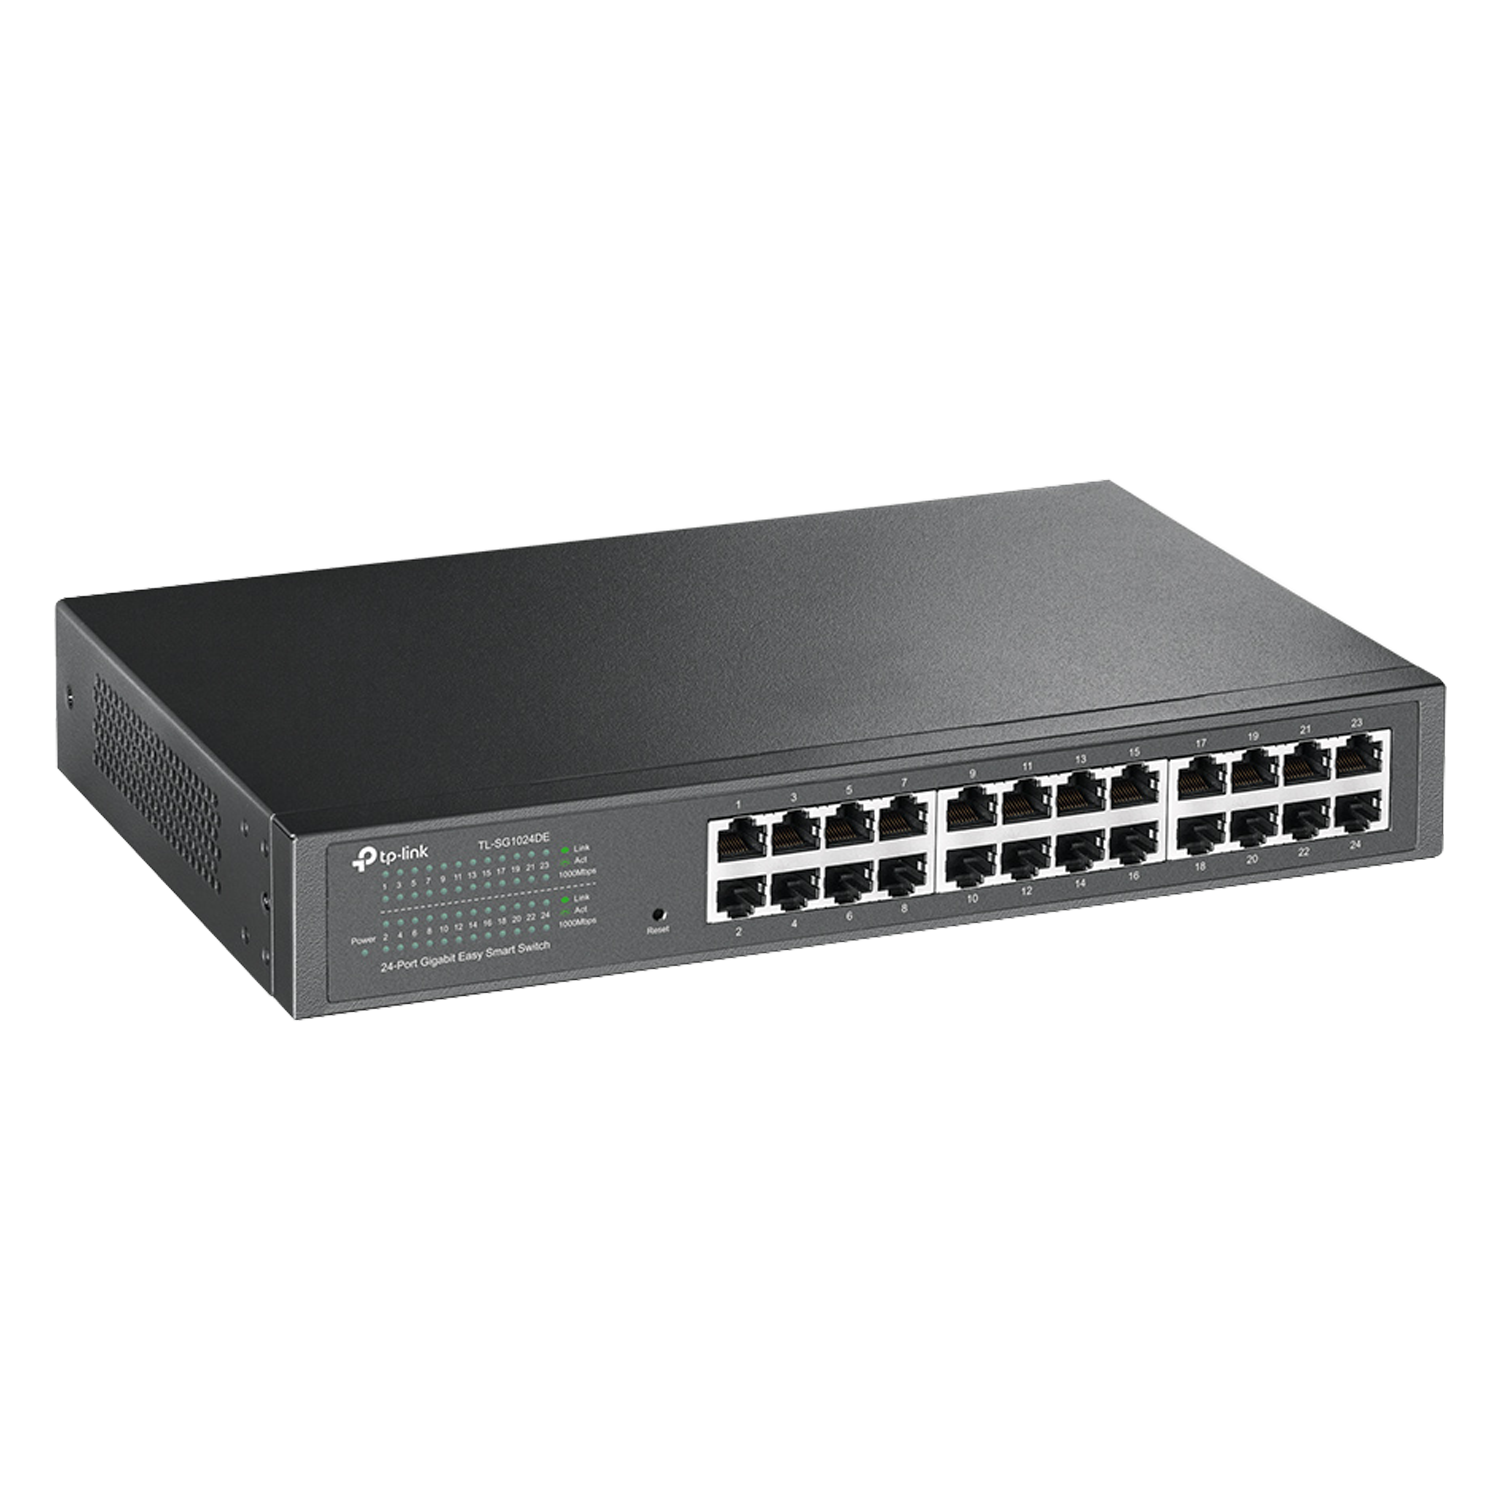 TP-Link HUB-Switch 24P TL-SG1024DE Gigabit Rackmount